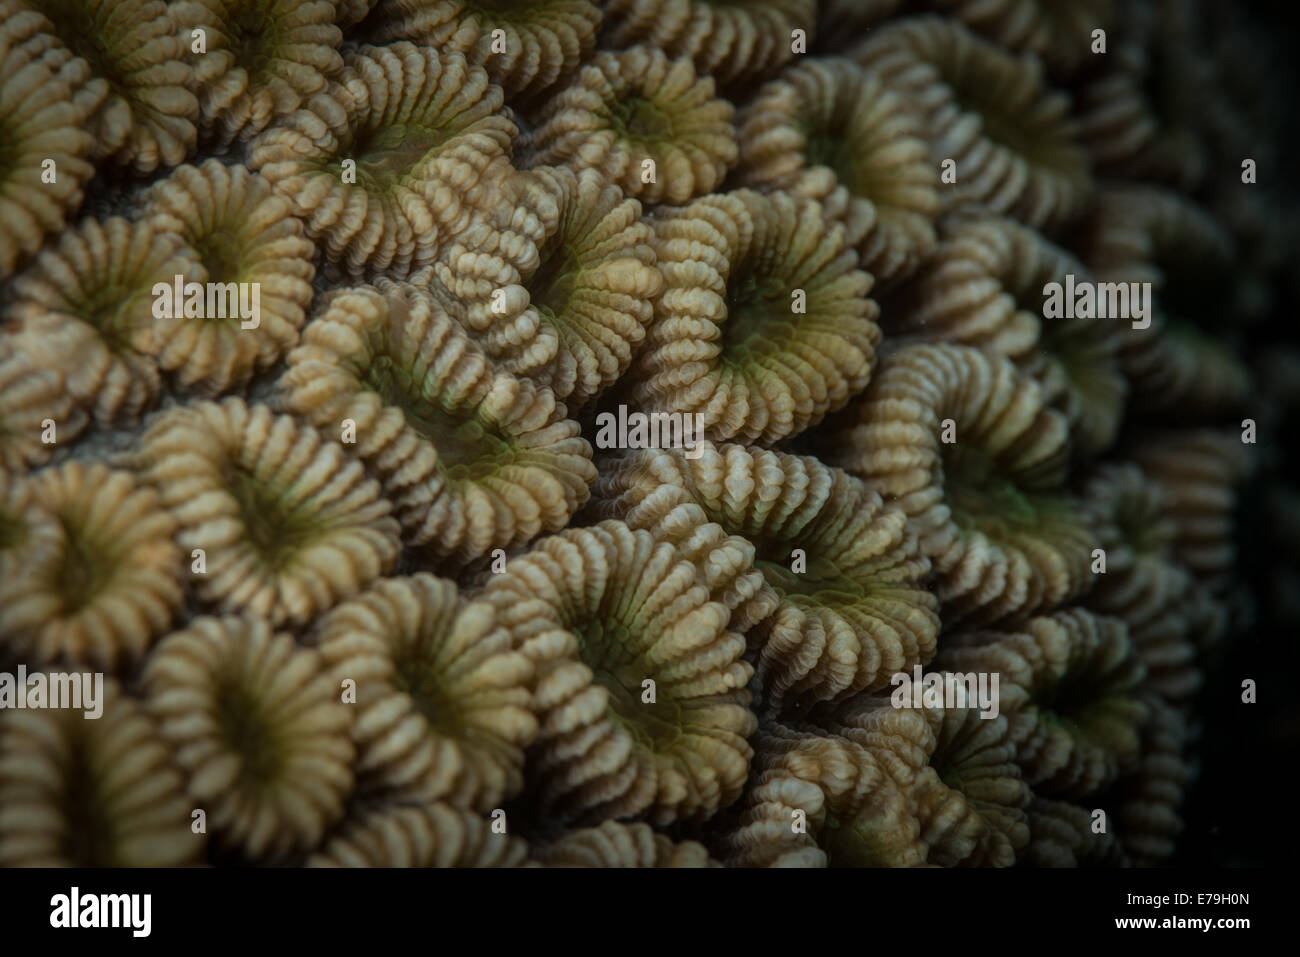 Eliptical star coral (Dichocoenia stokesii) in the Red Sea, Egypt Stock Photo